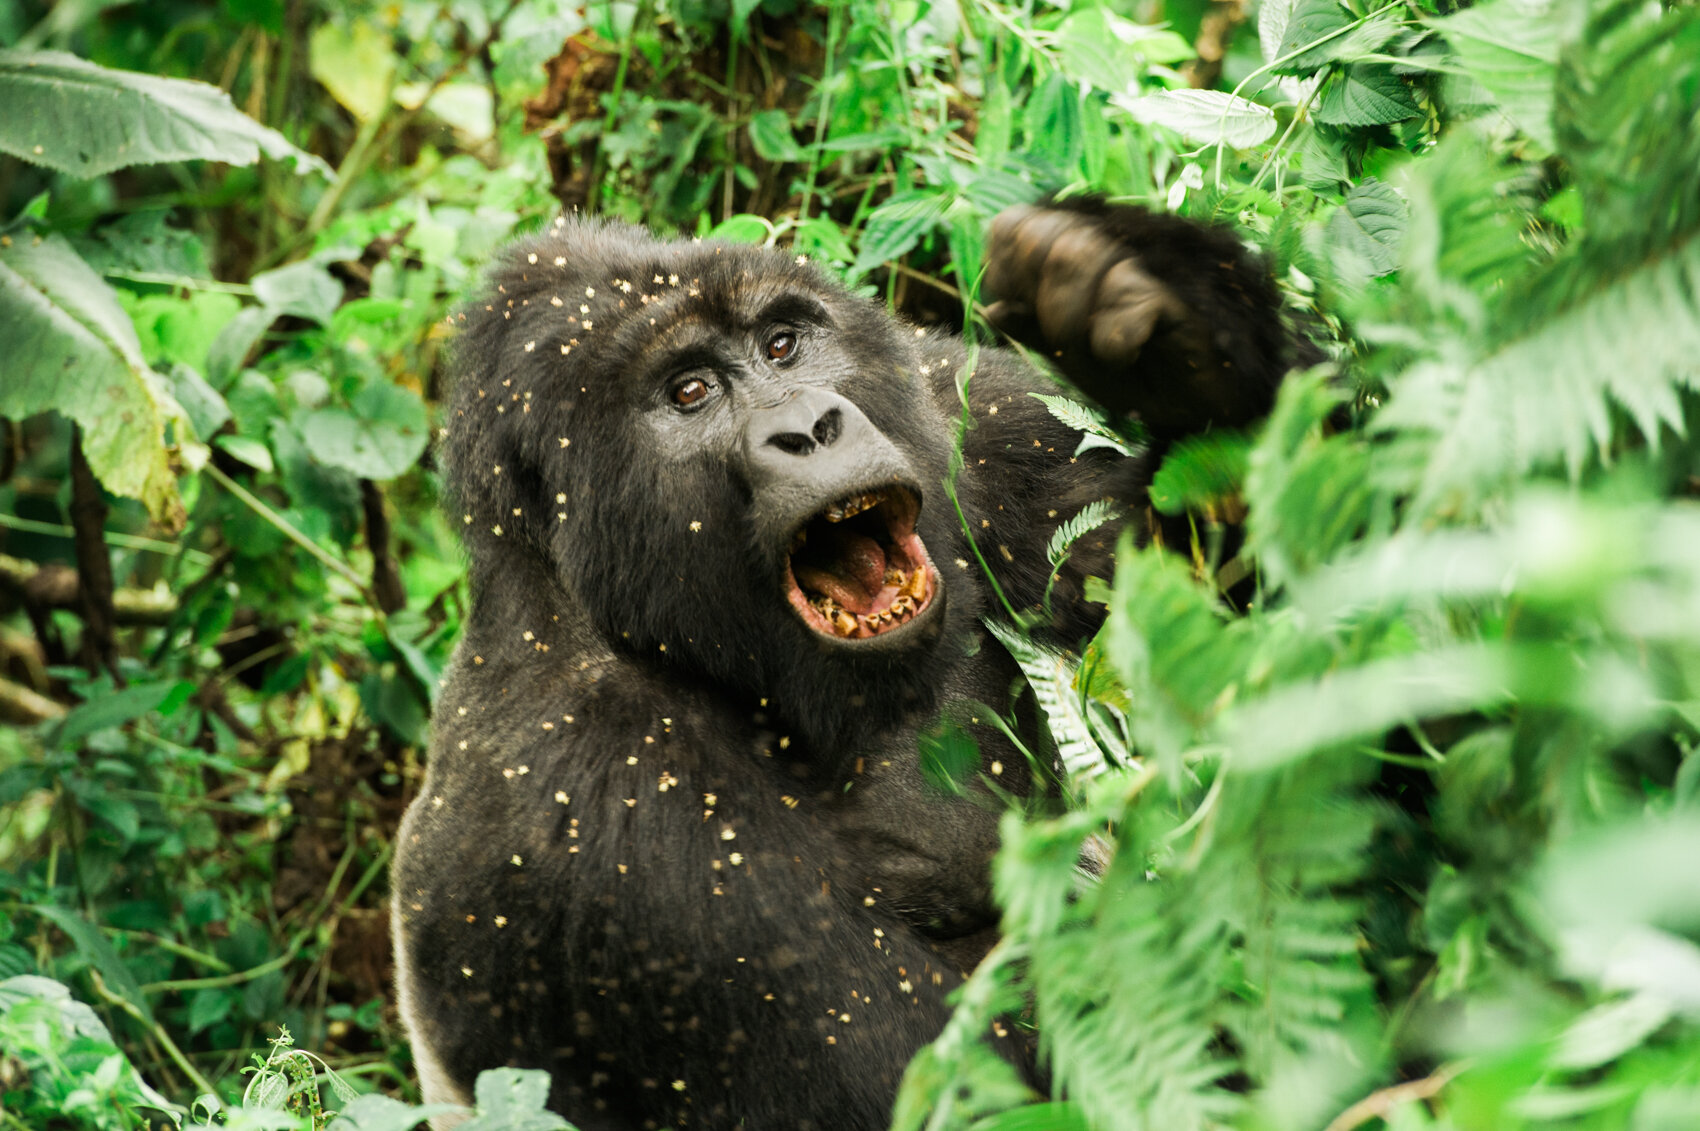  A silver-backed mountain gorilla, Bwindi Impenetrable Forest, Uganda 